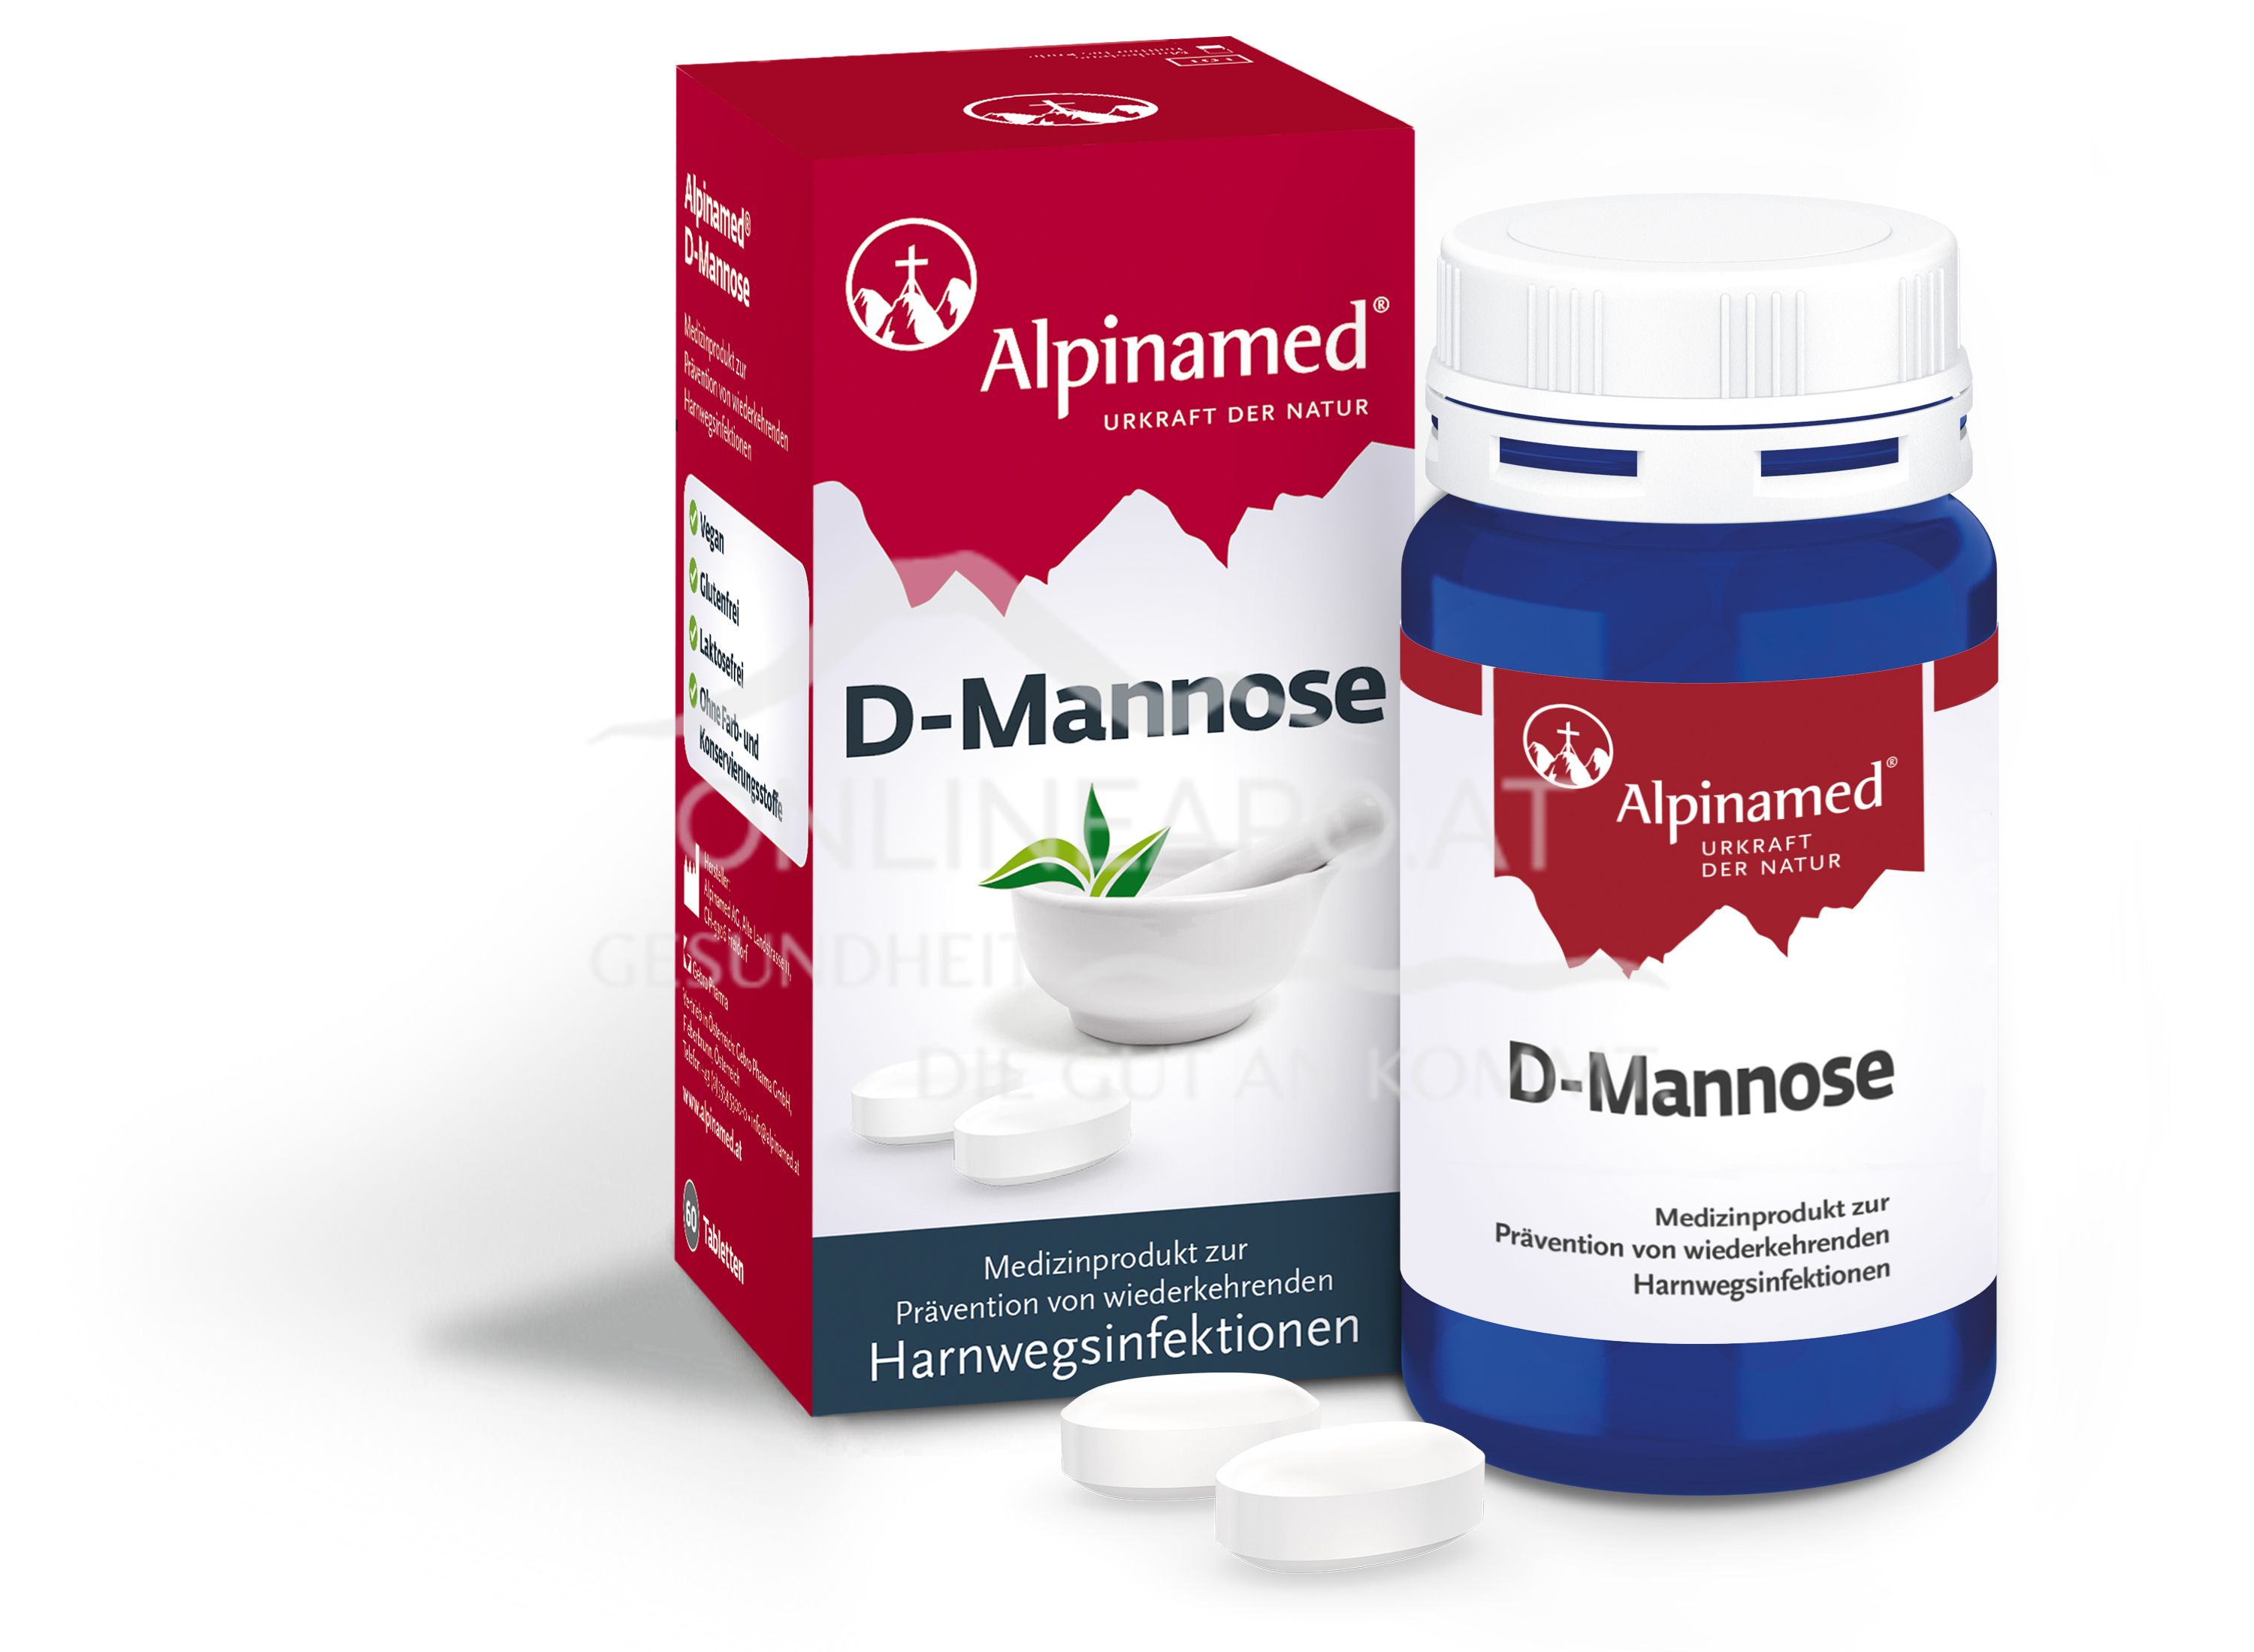 Alpinamed® D-Mannose Tabletten